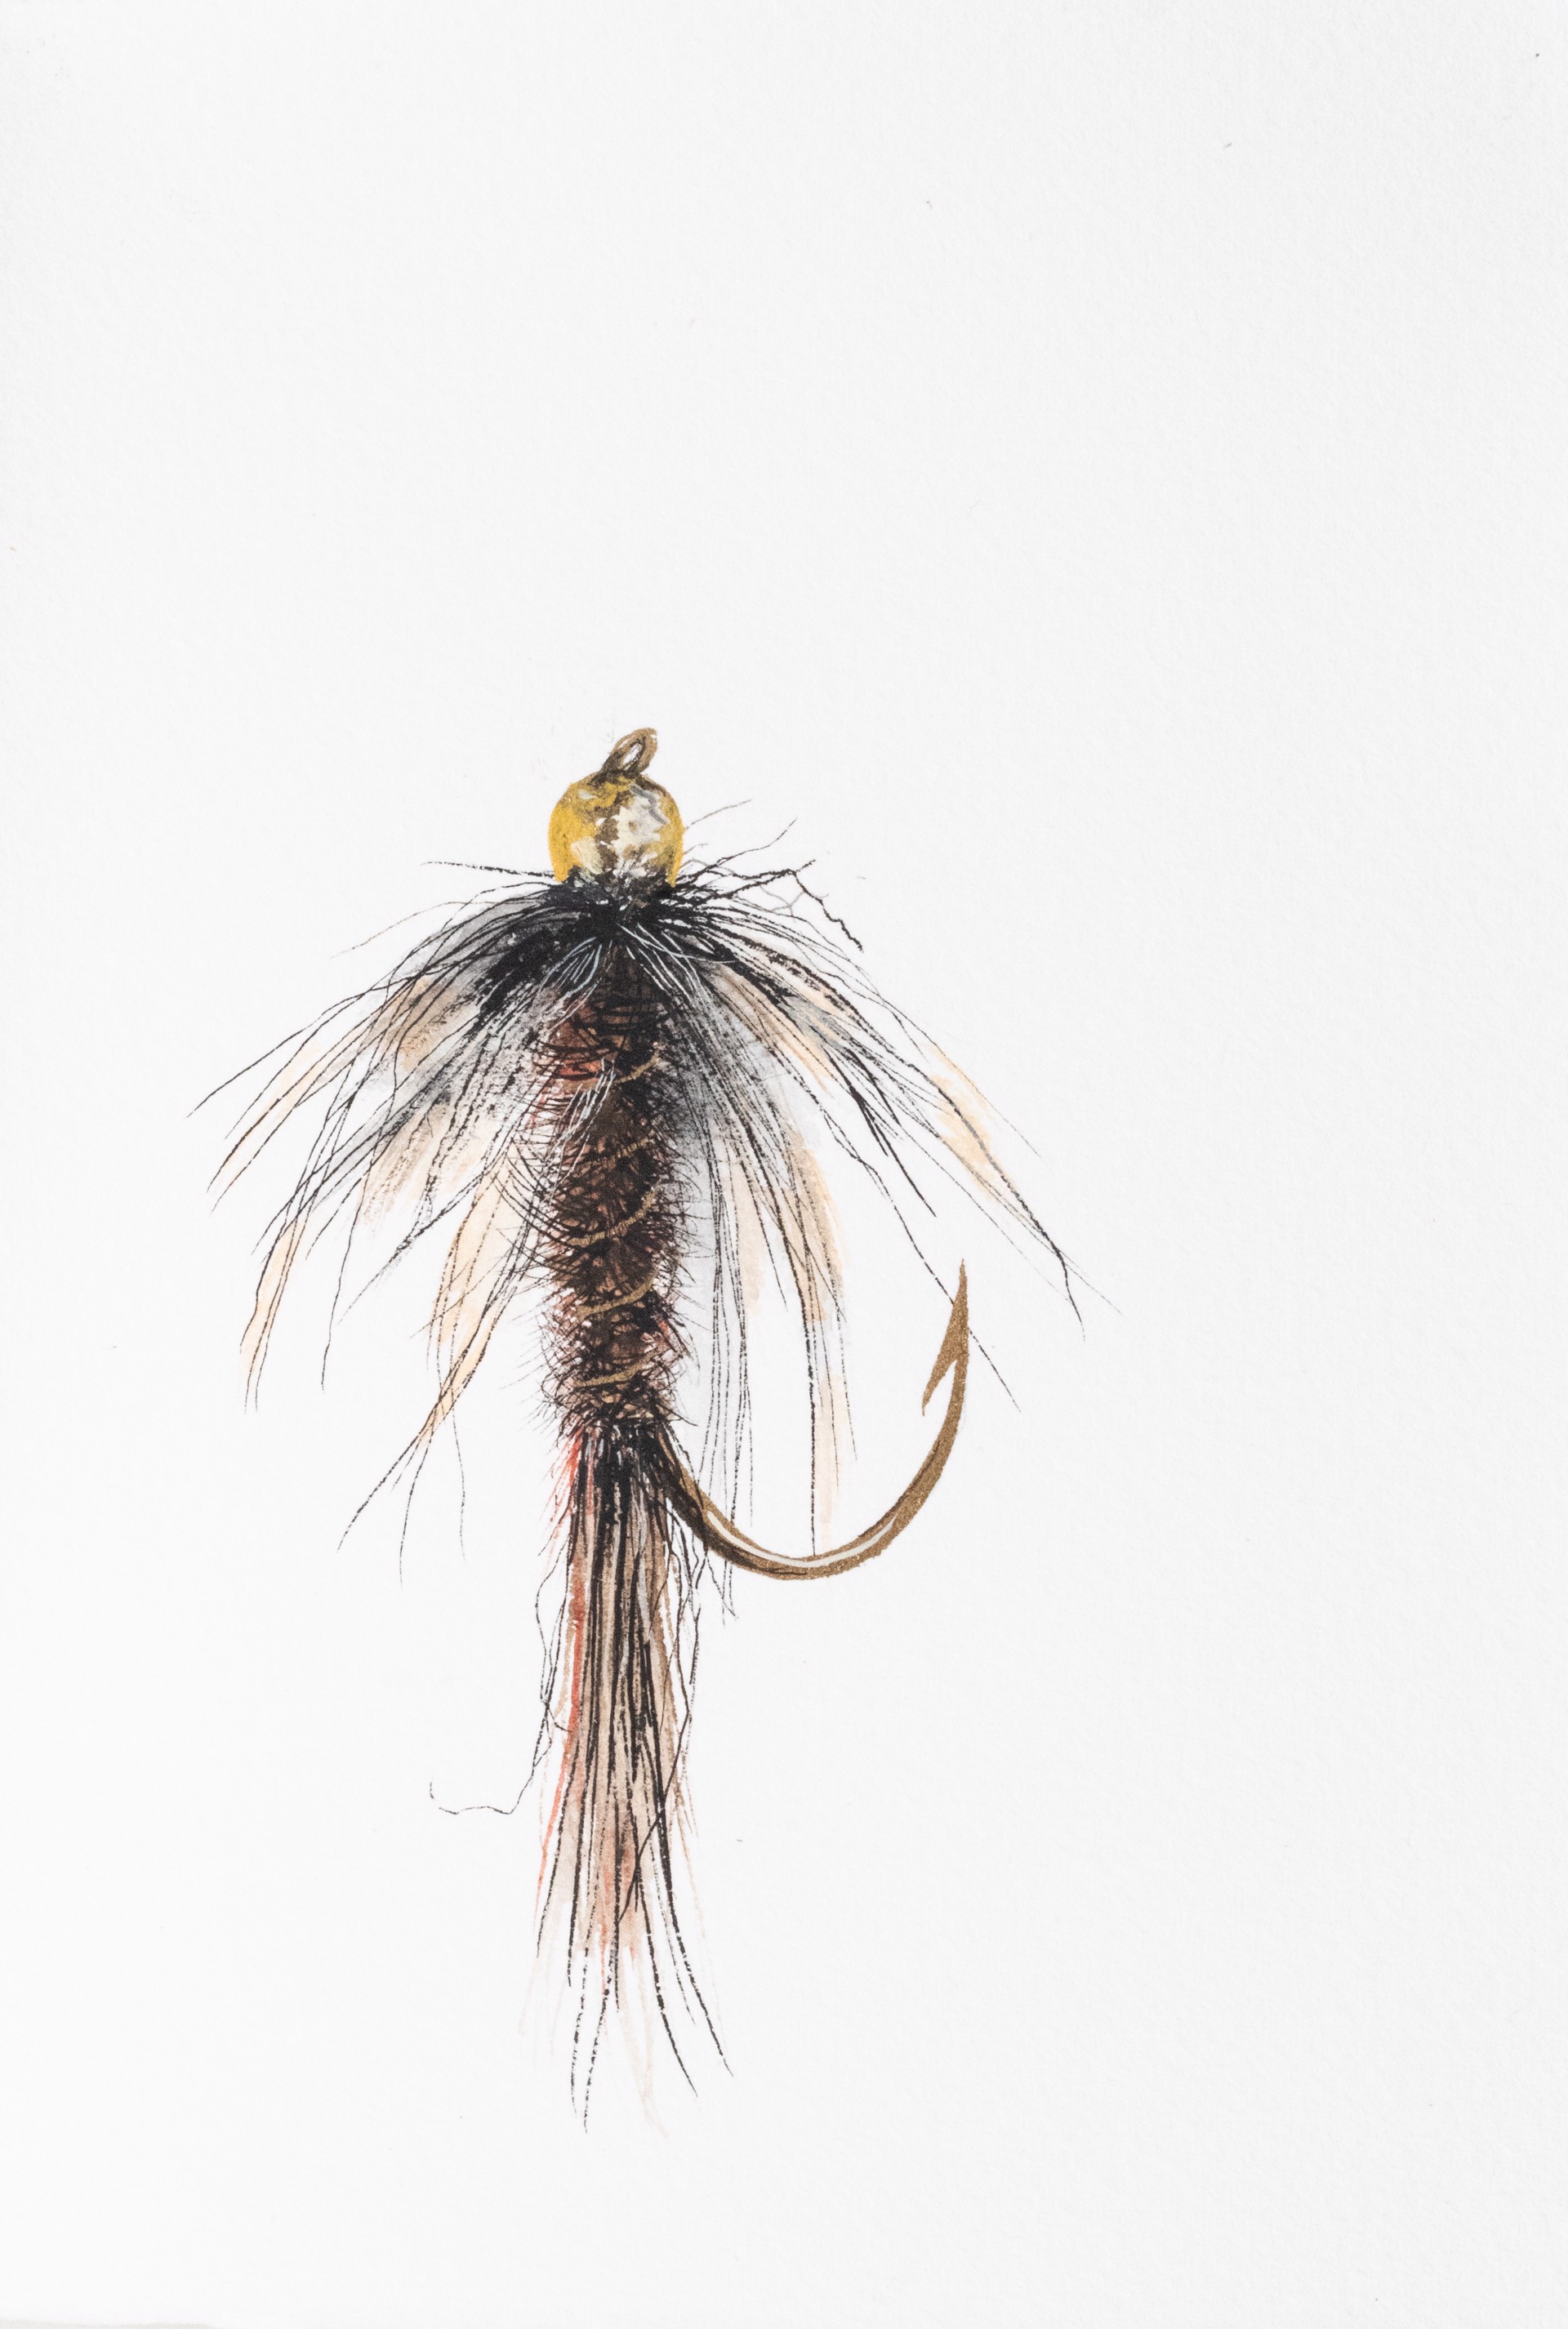 Pheasant Tail by Meredith Mejerle